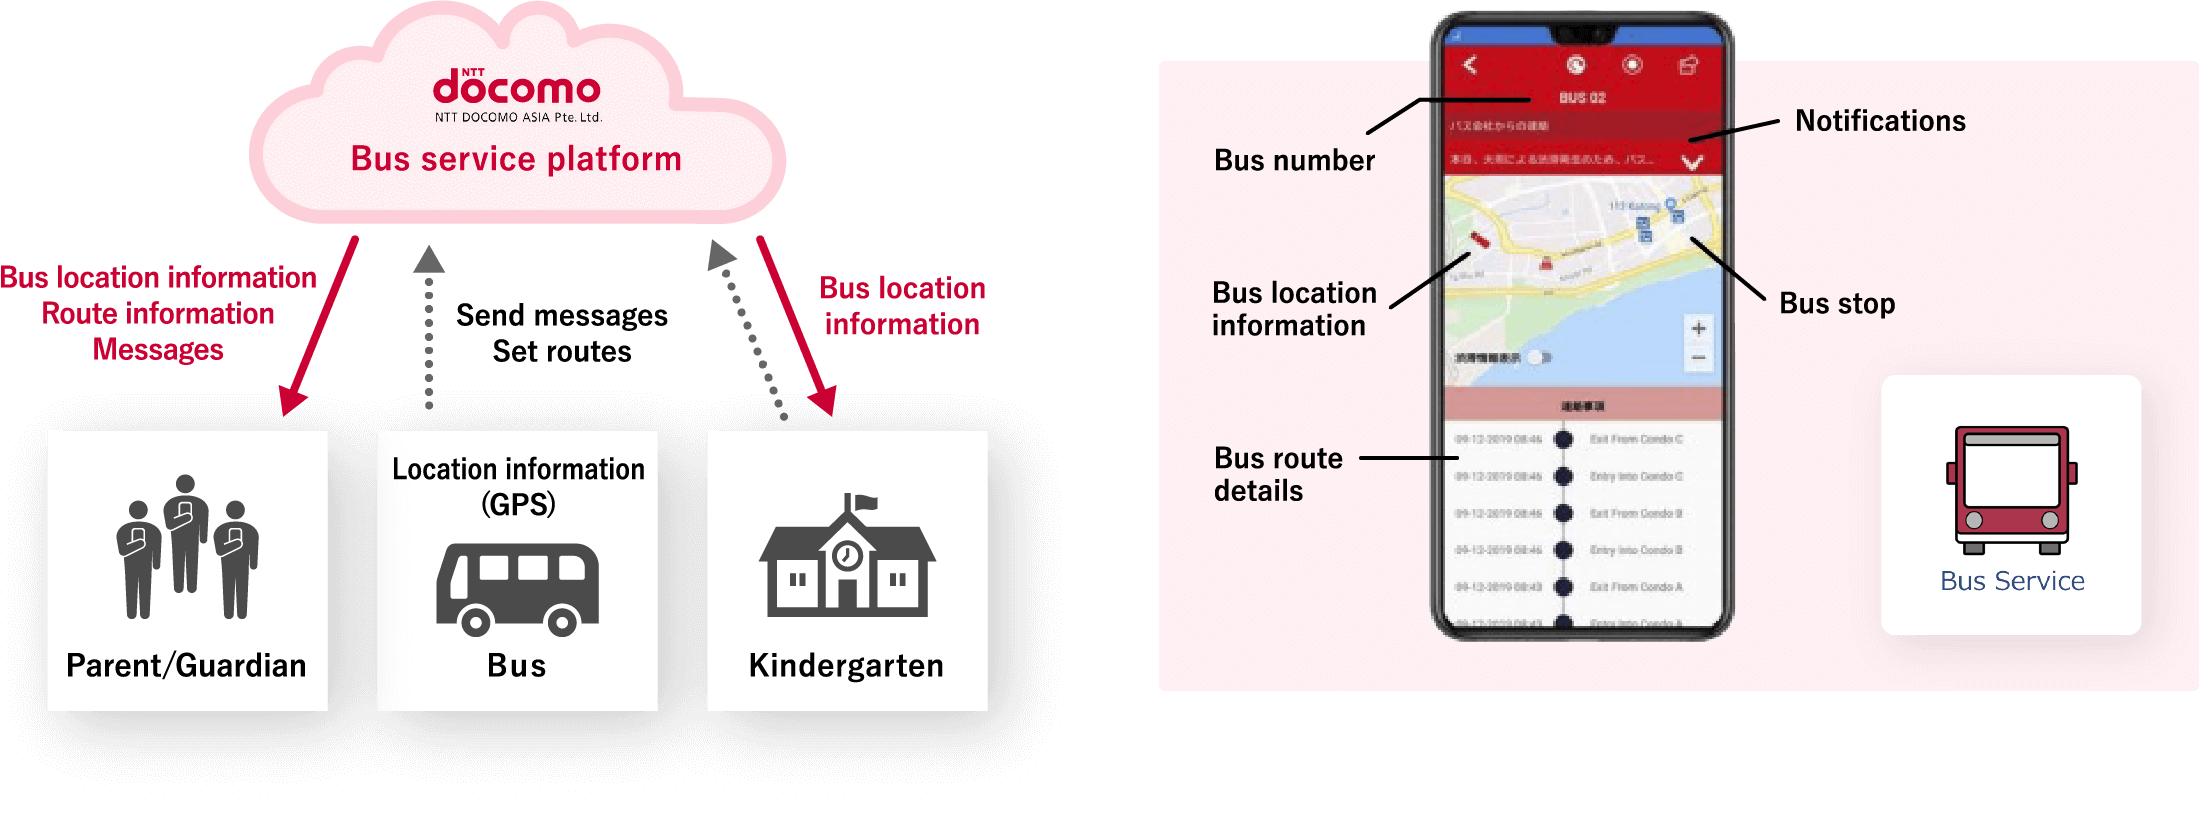 Bus service platform